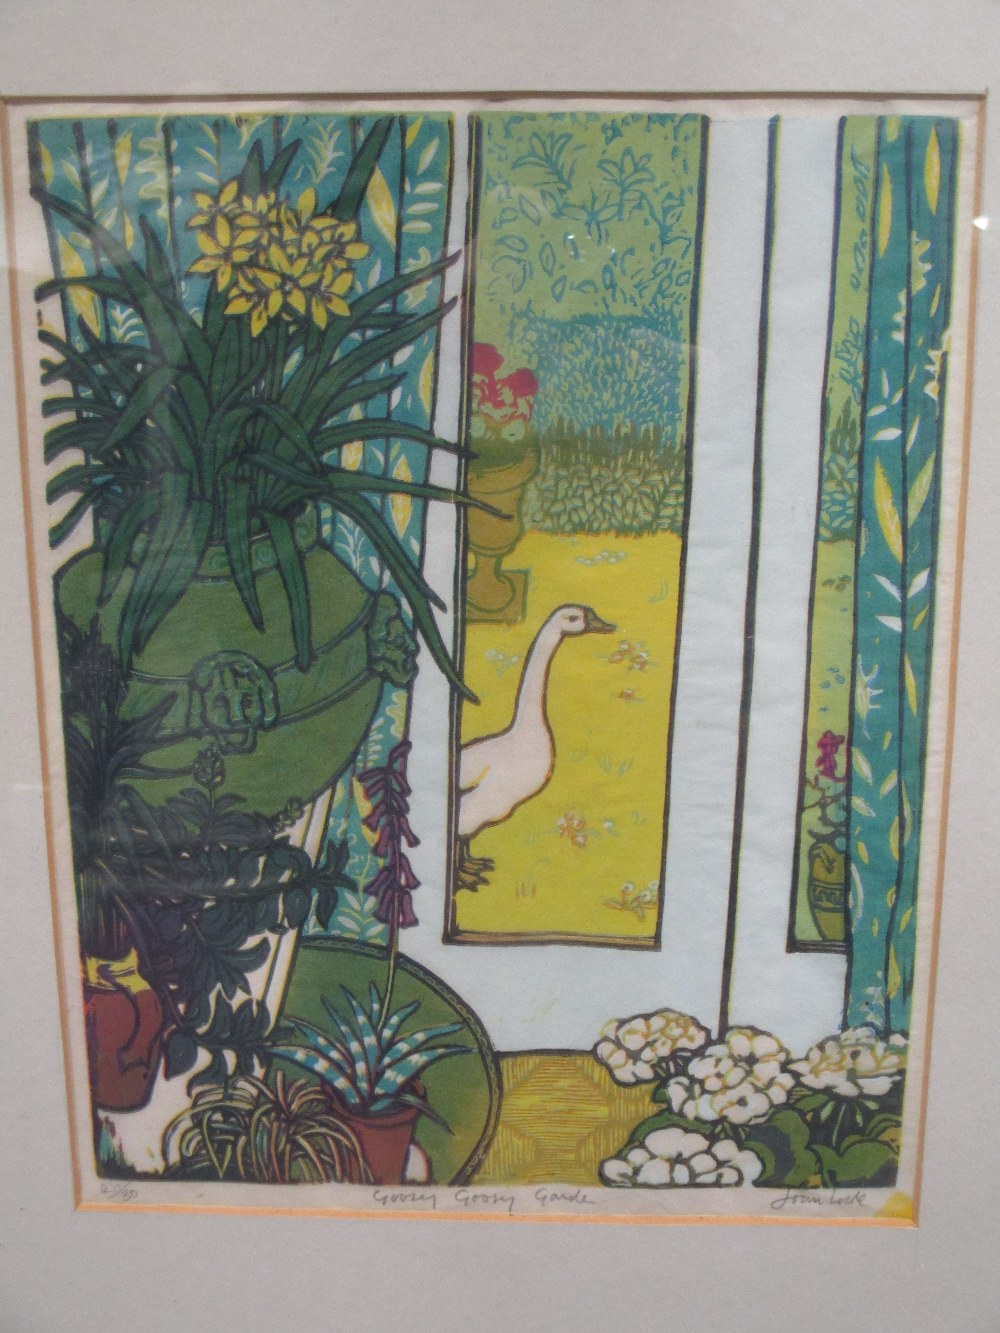 Joan Lock (Modern British School) 'Goosey, Goosey, Gander', signed and numbered 26/30, lino-cut,